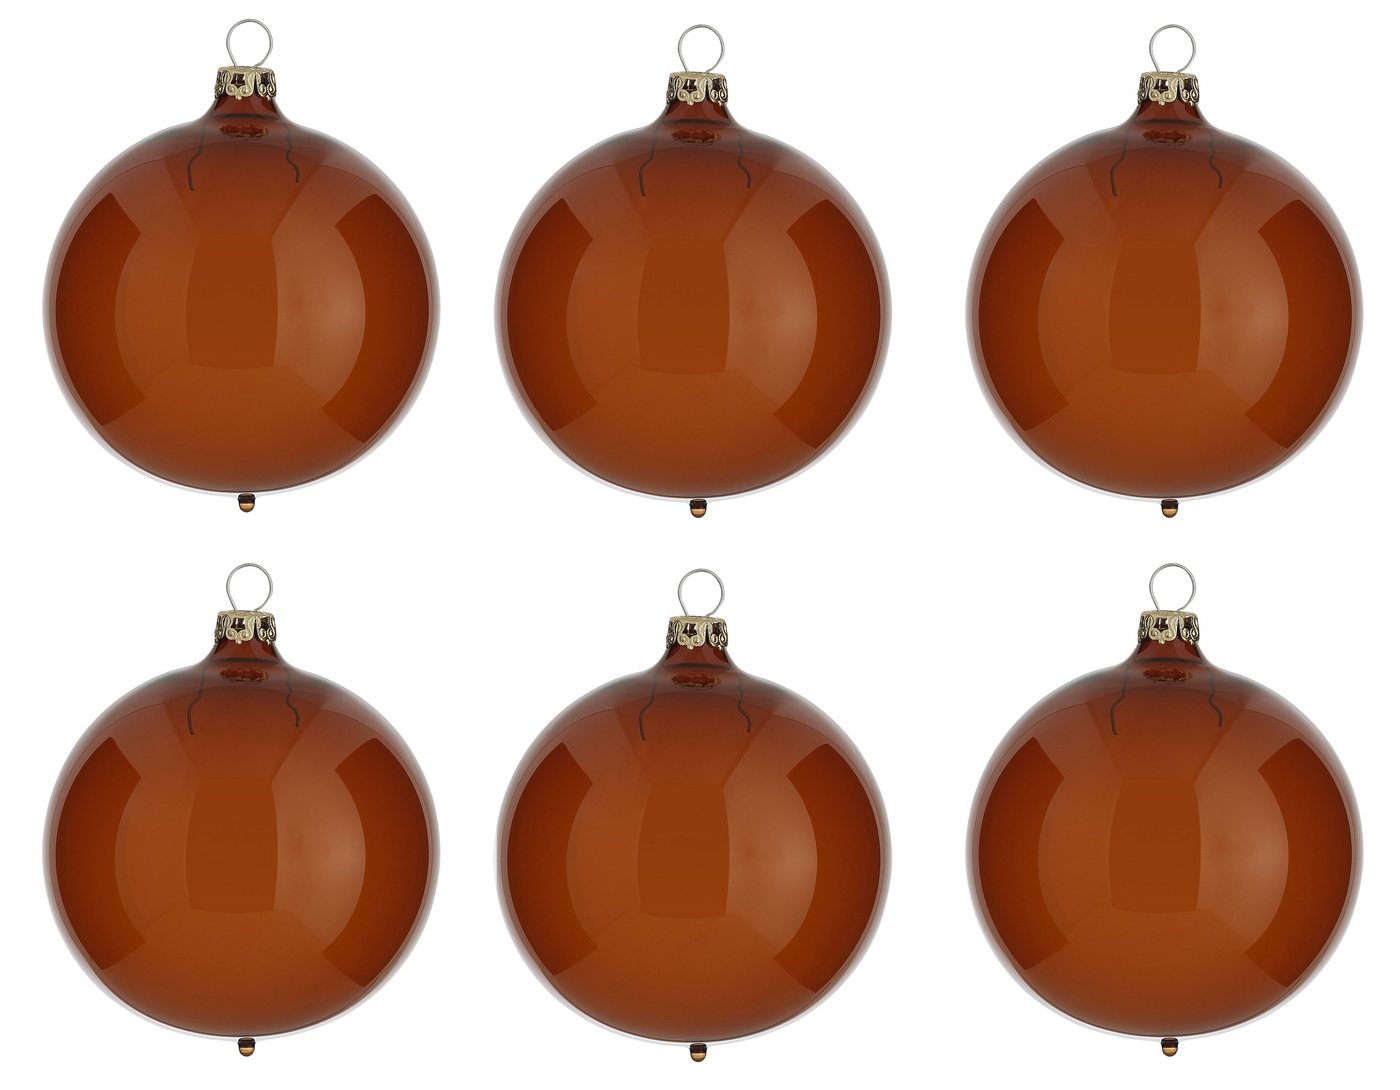 Thüringer Glasdesign Weihnachtsbaumkugel Transparent (6 St), braun von Thüringer Glasdesign